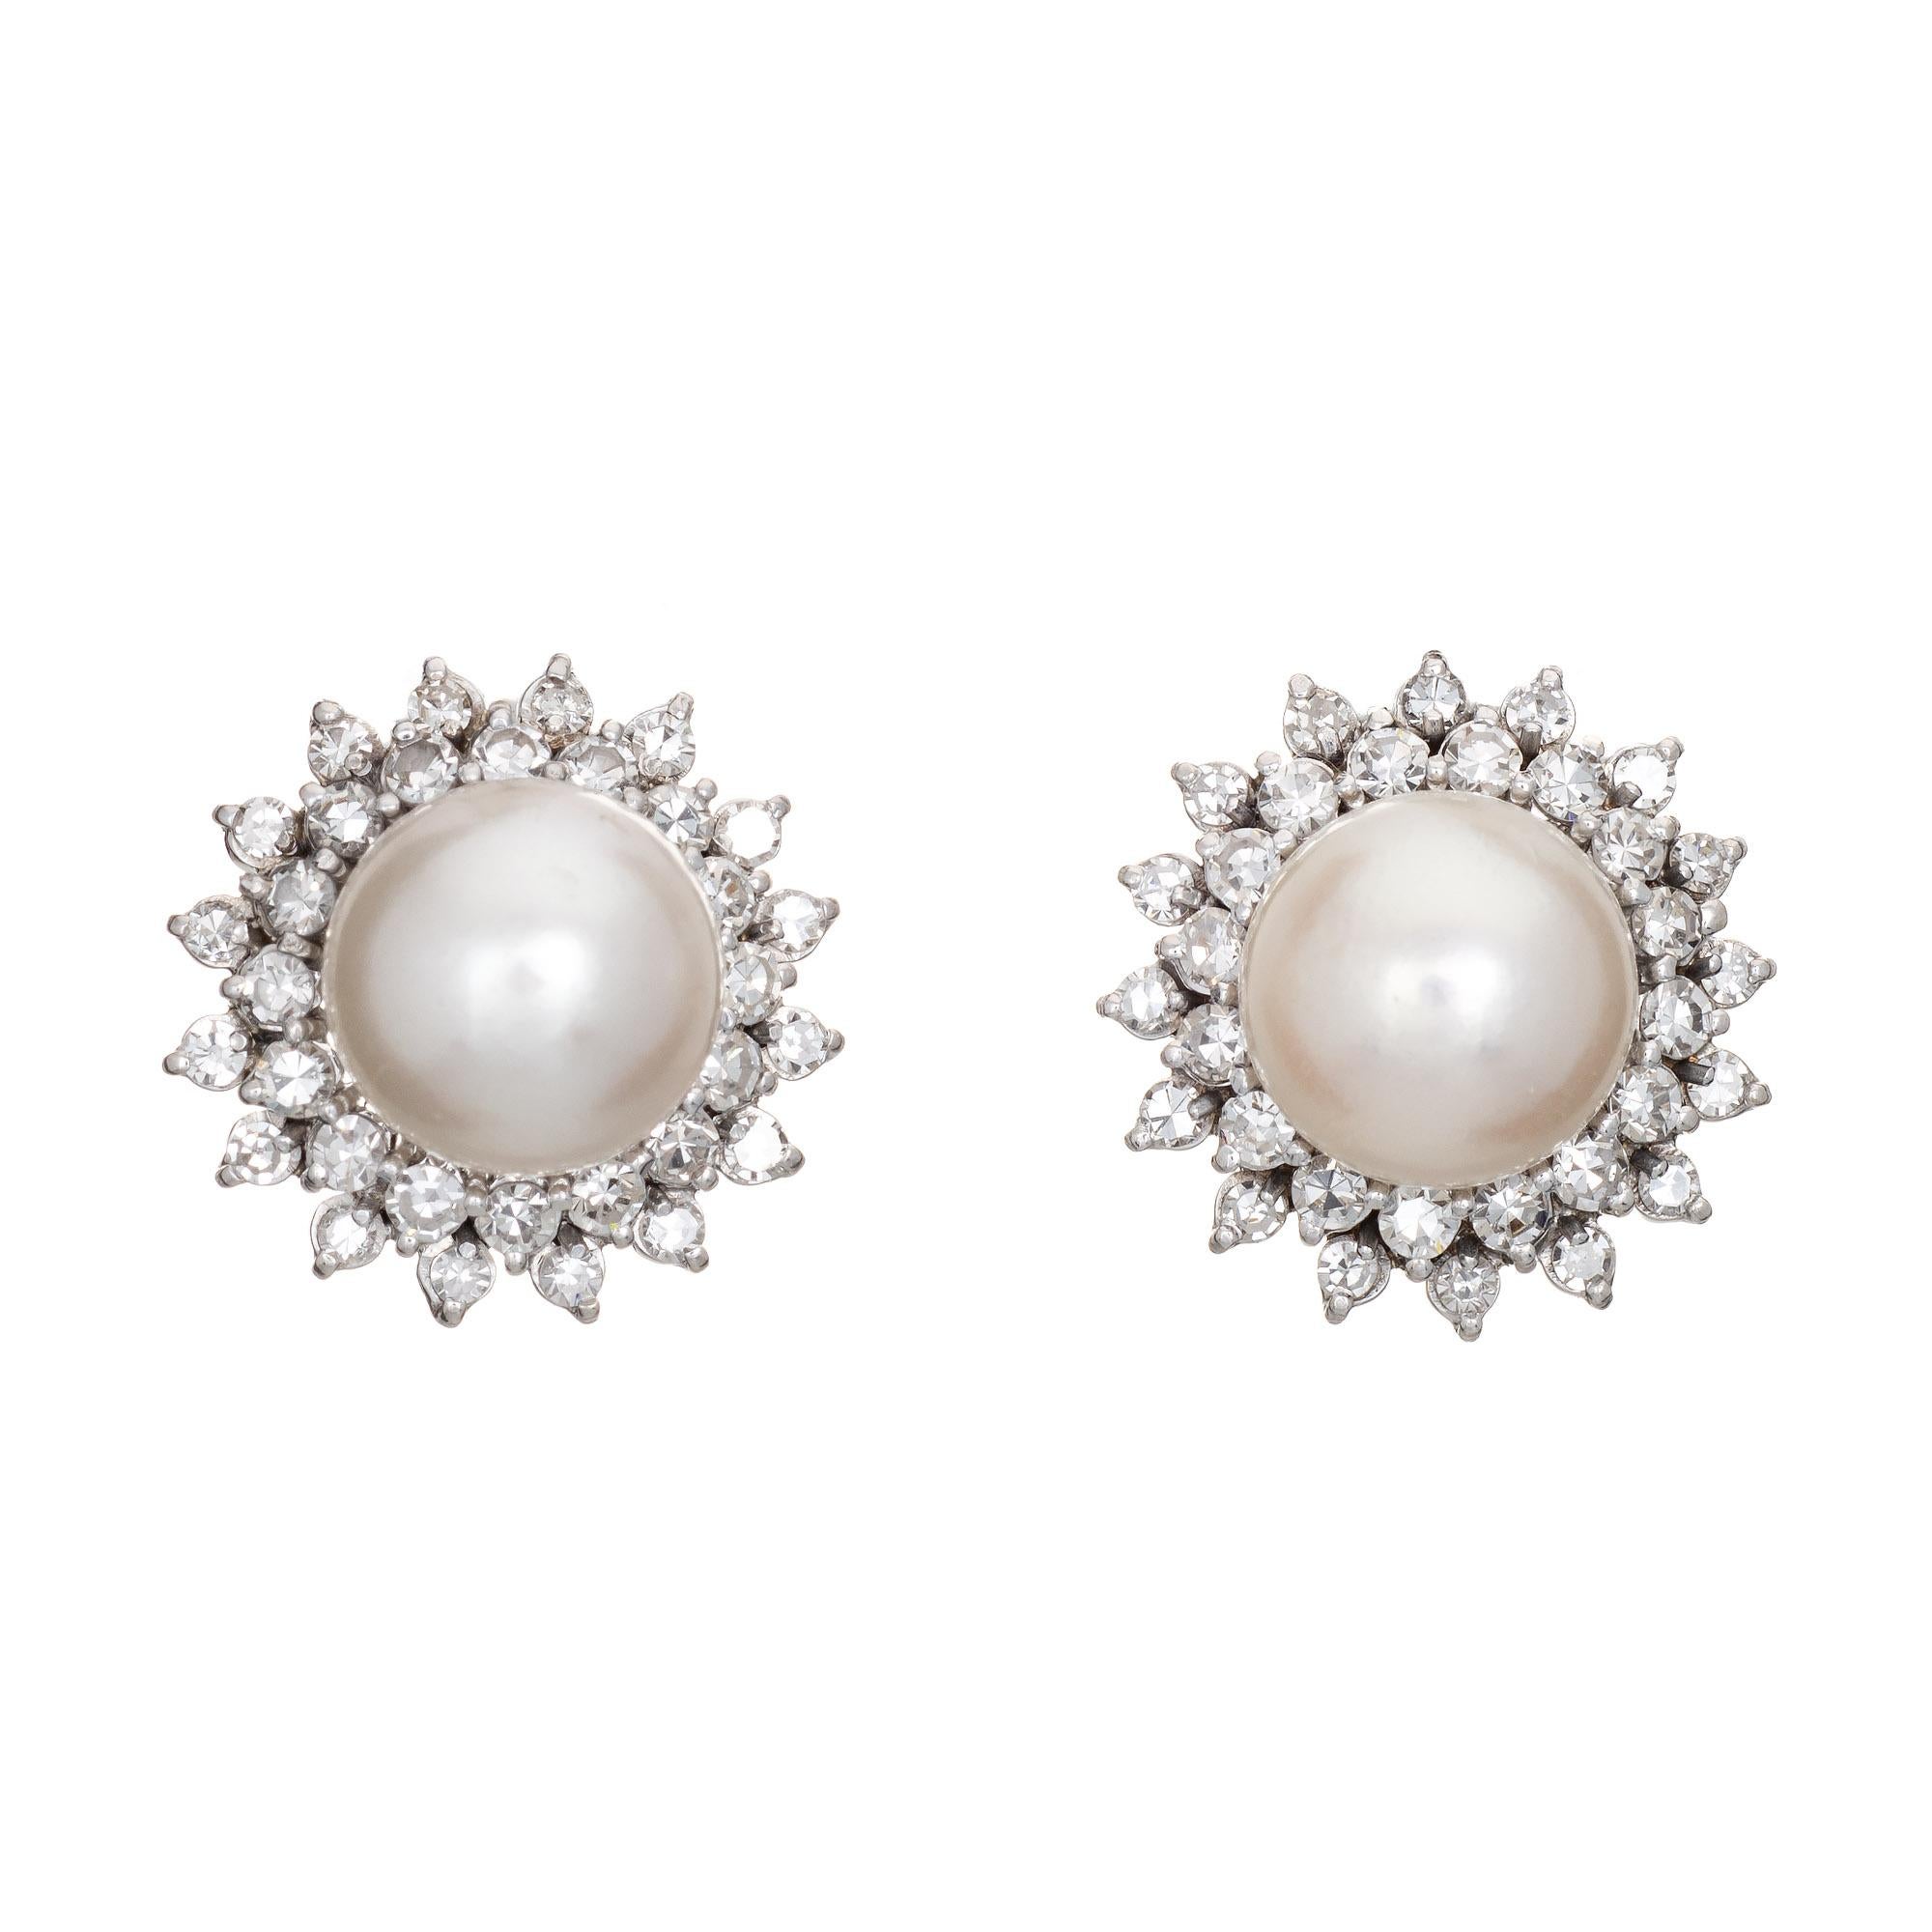 14k south sea pearl earring price -china -b2b -forum -blog -wikipedia -.cn -.gov -alibaba -taobao